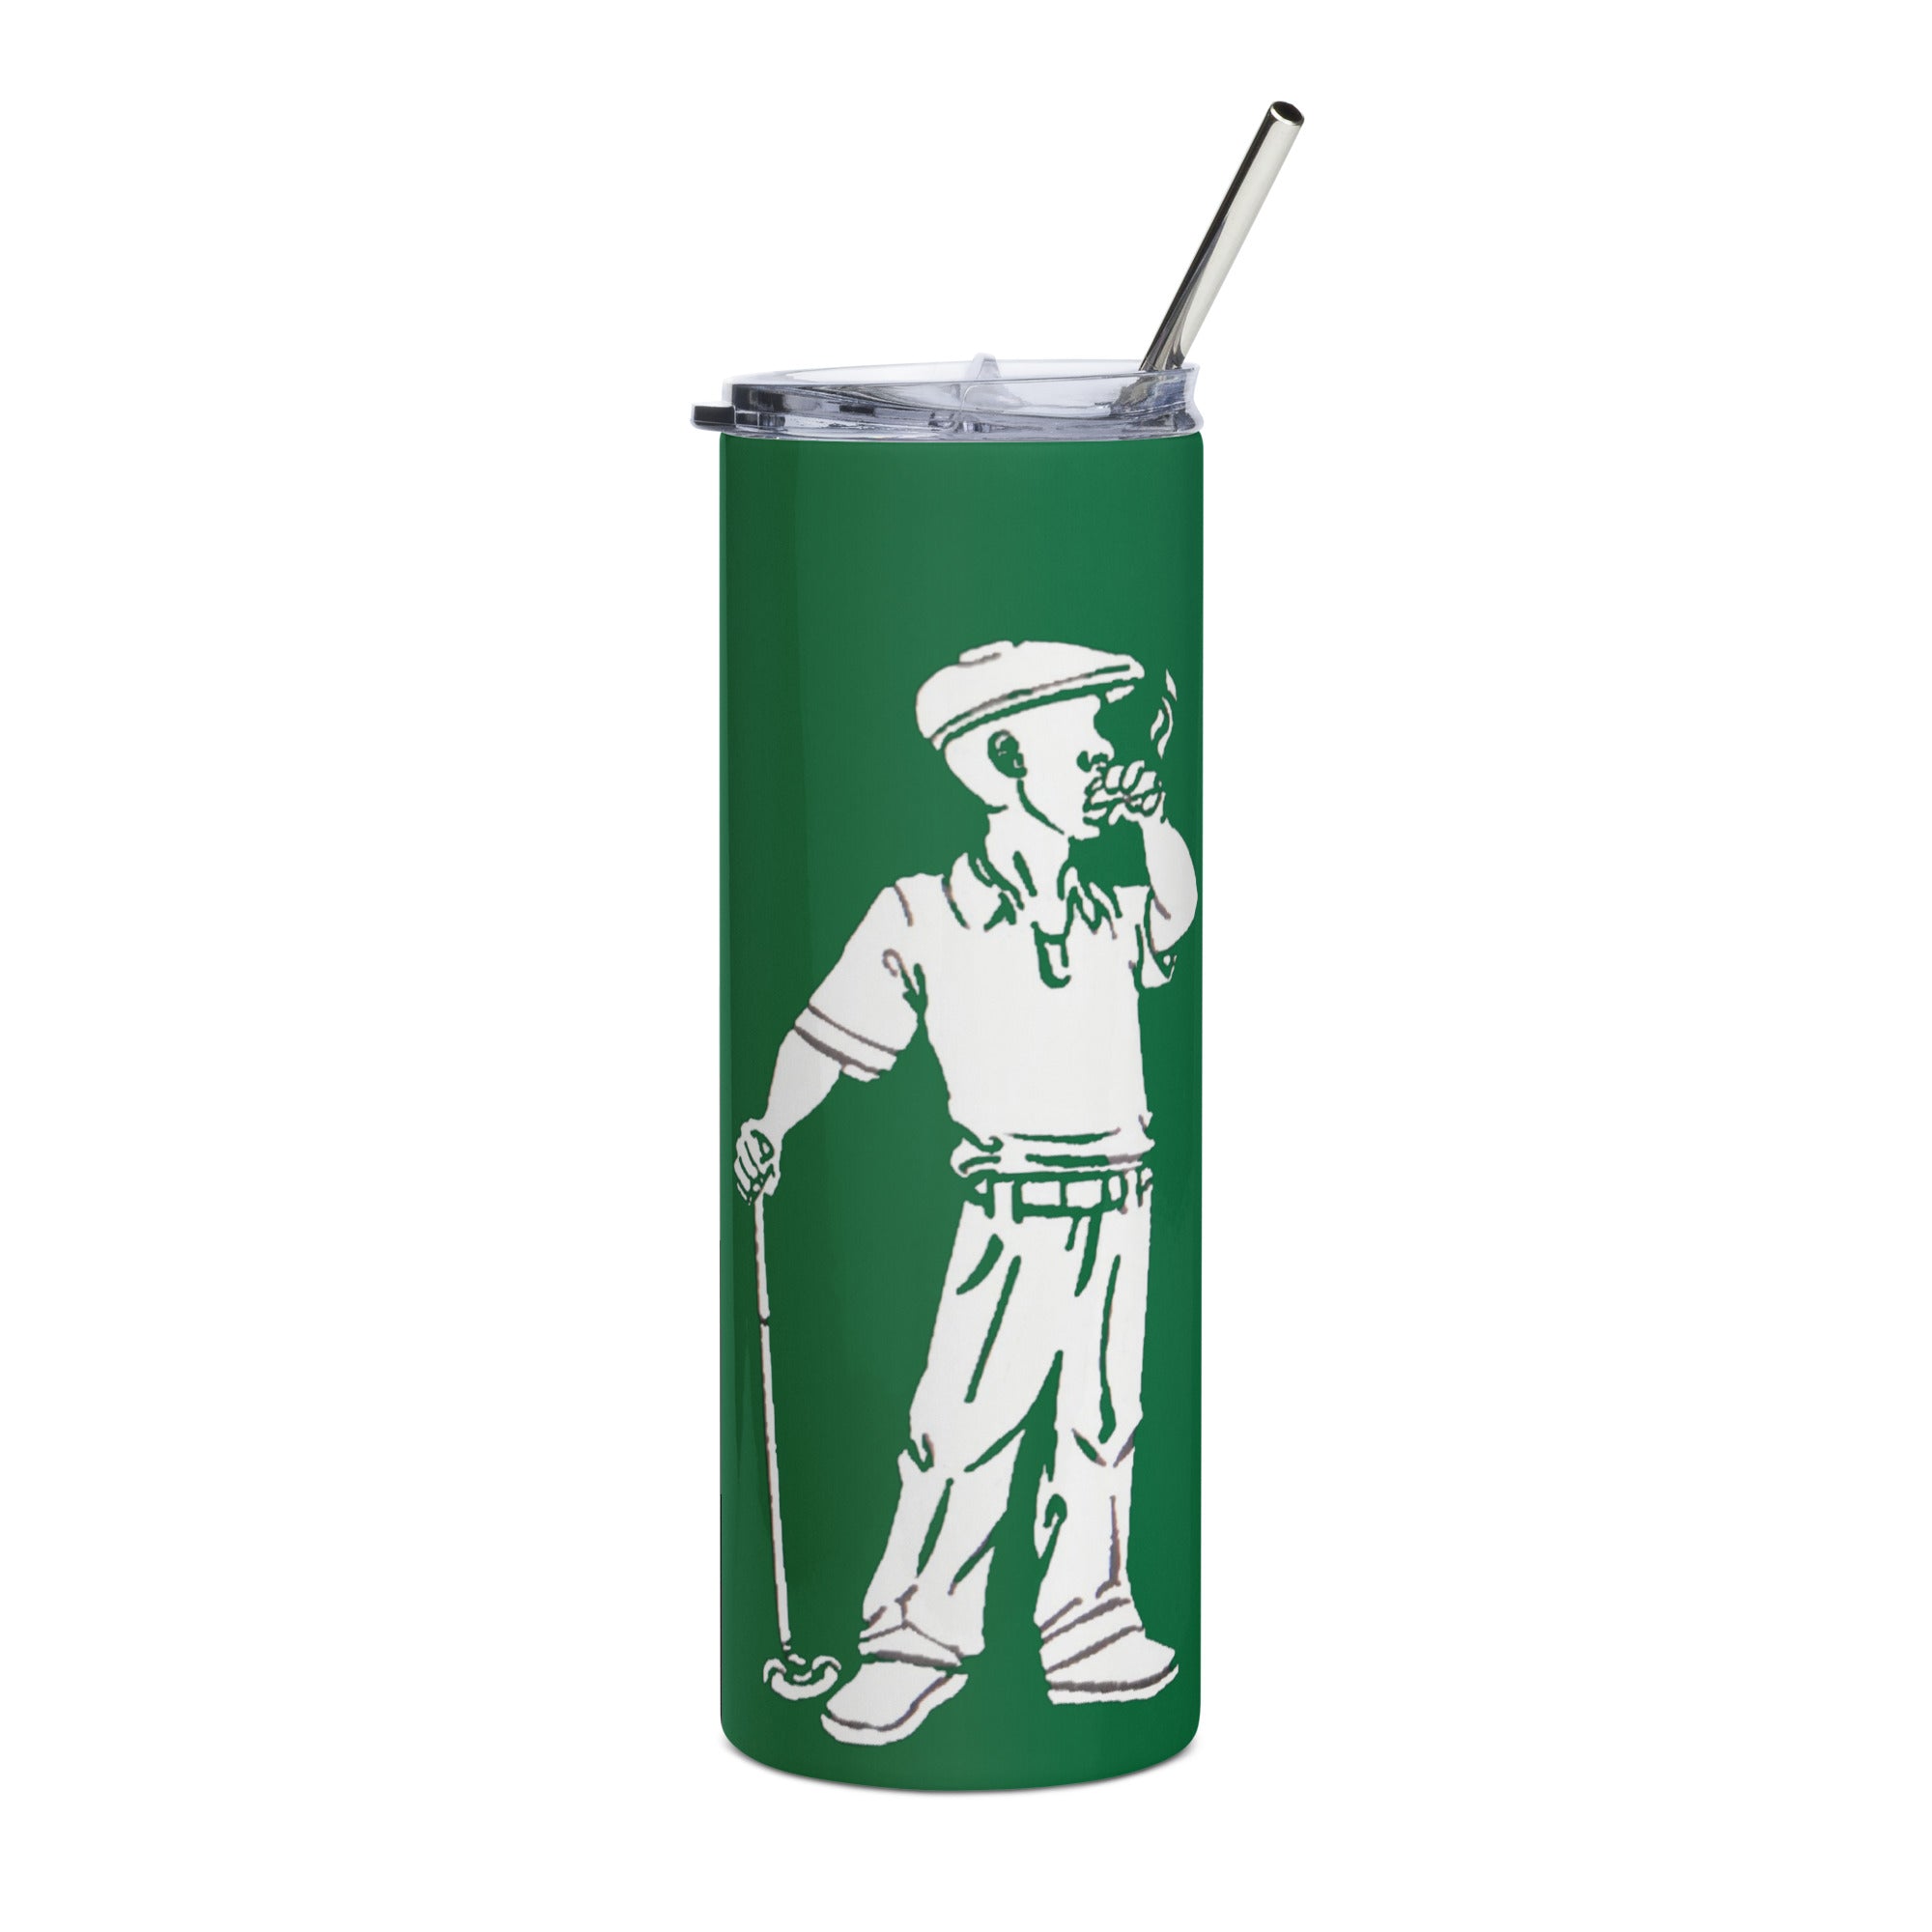 Male Cigar GolferStainless steel tumbler